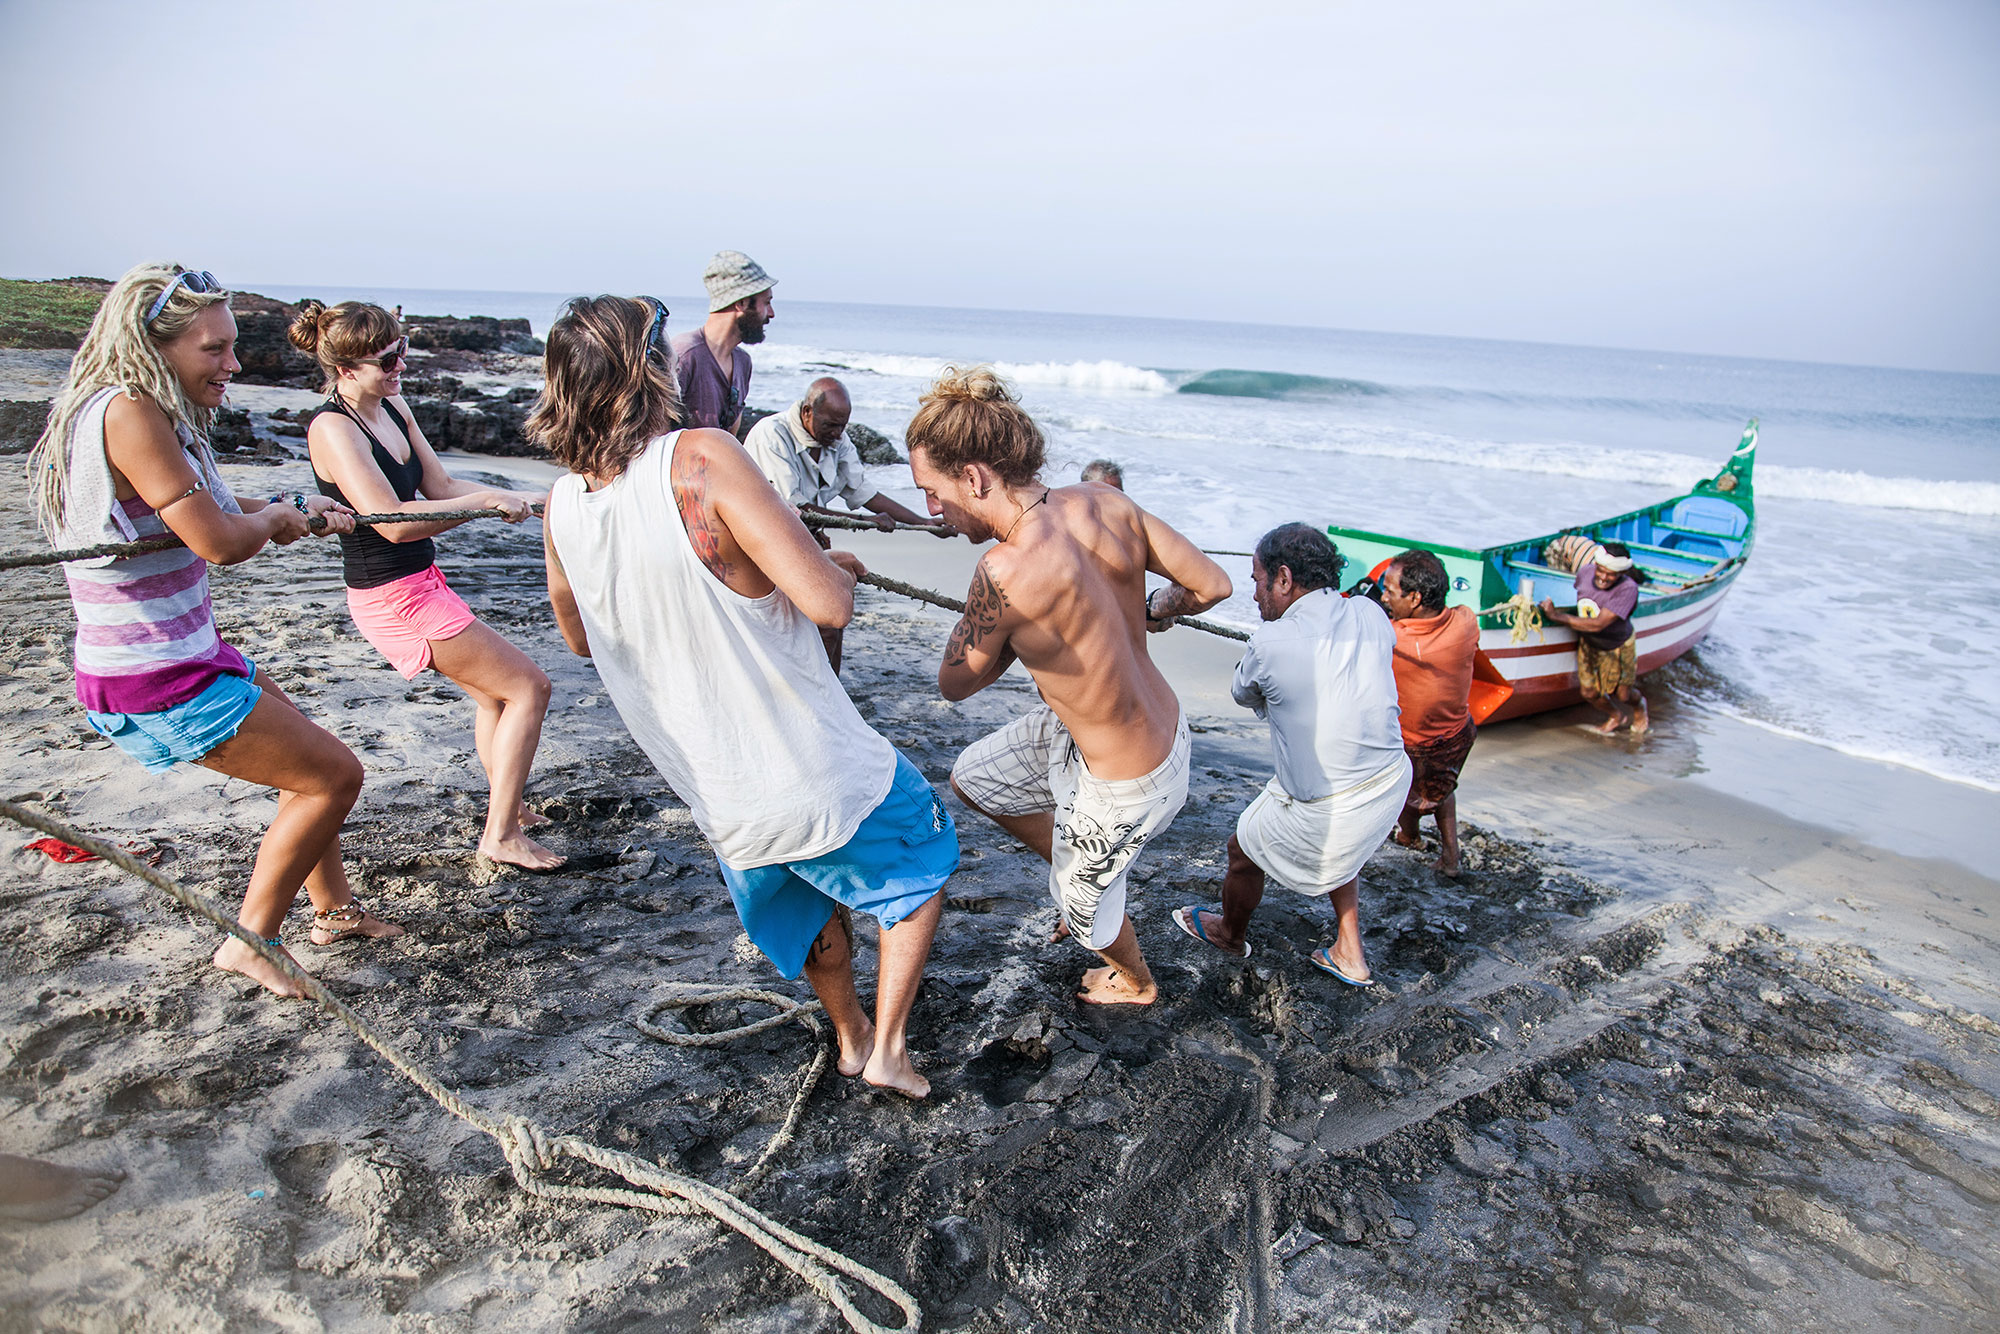 Surfers help fishermen drag their boat to the shore. PHOTO: Berta Tilmante